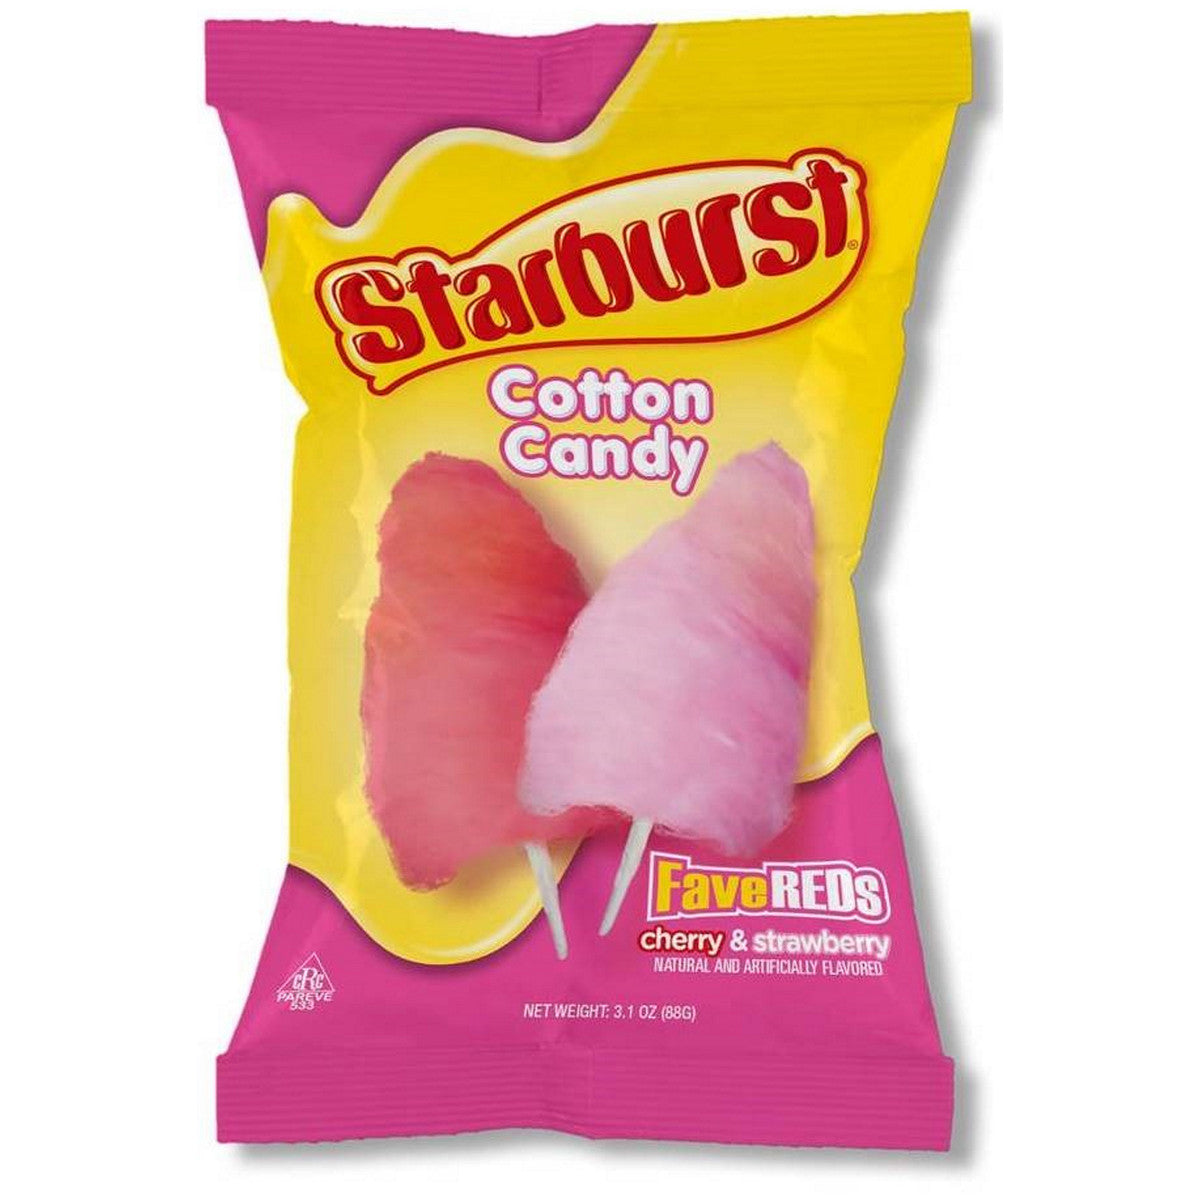 Starburst Cotton Candy FaveREDs Cherry & Strawberry-hotRAGS.com